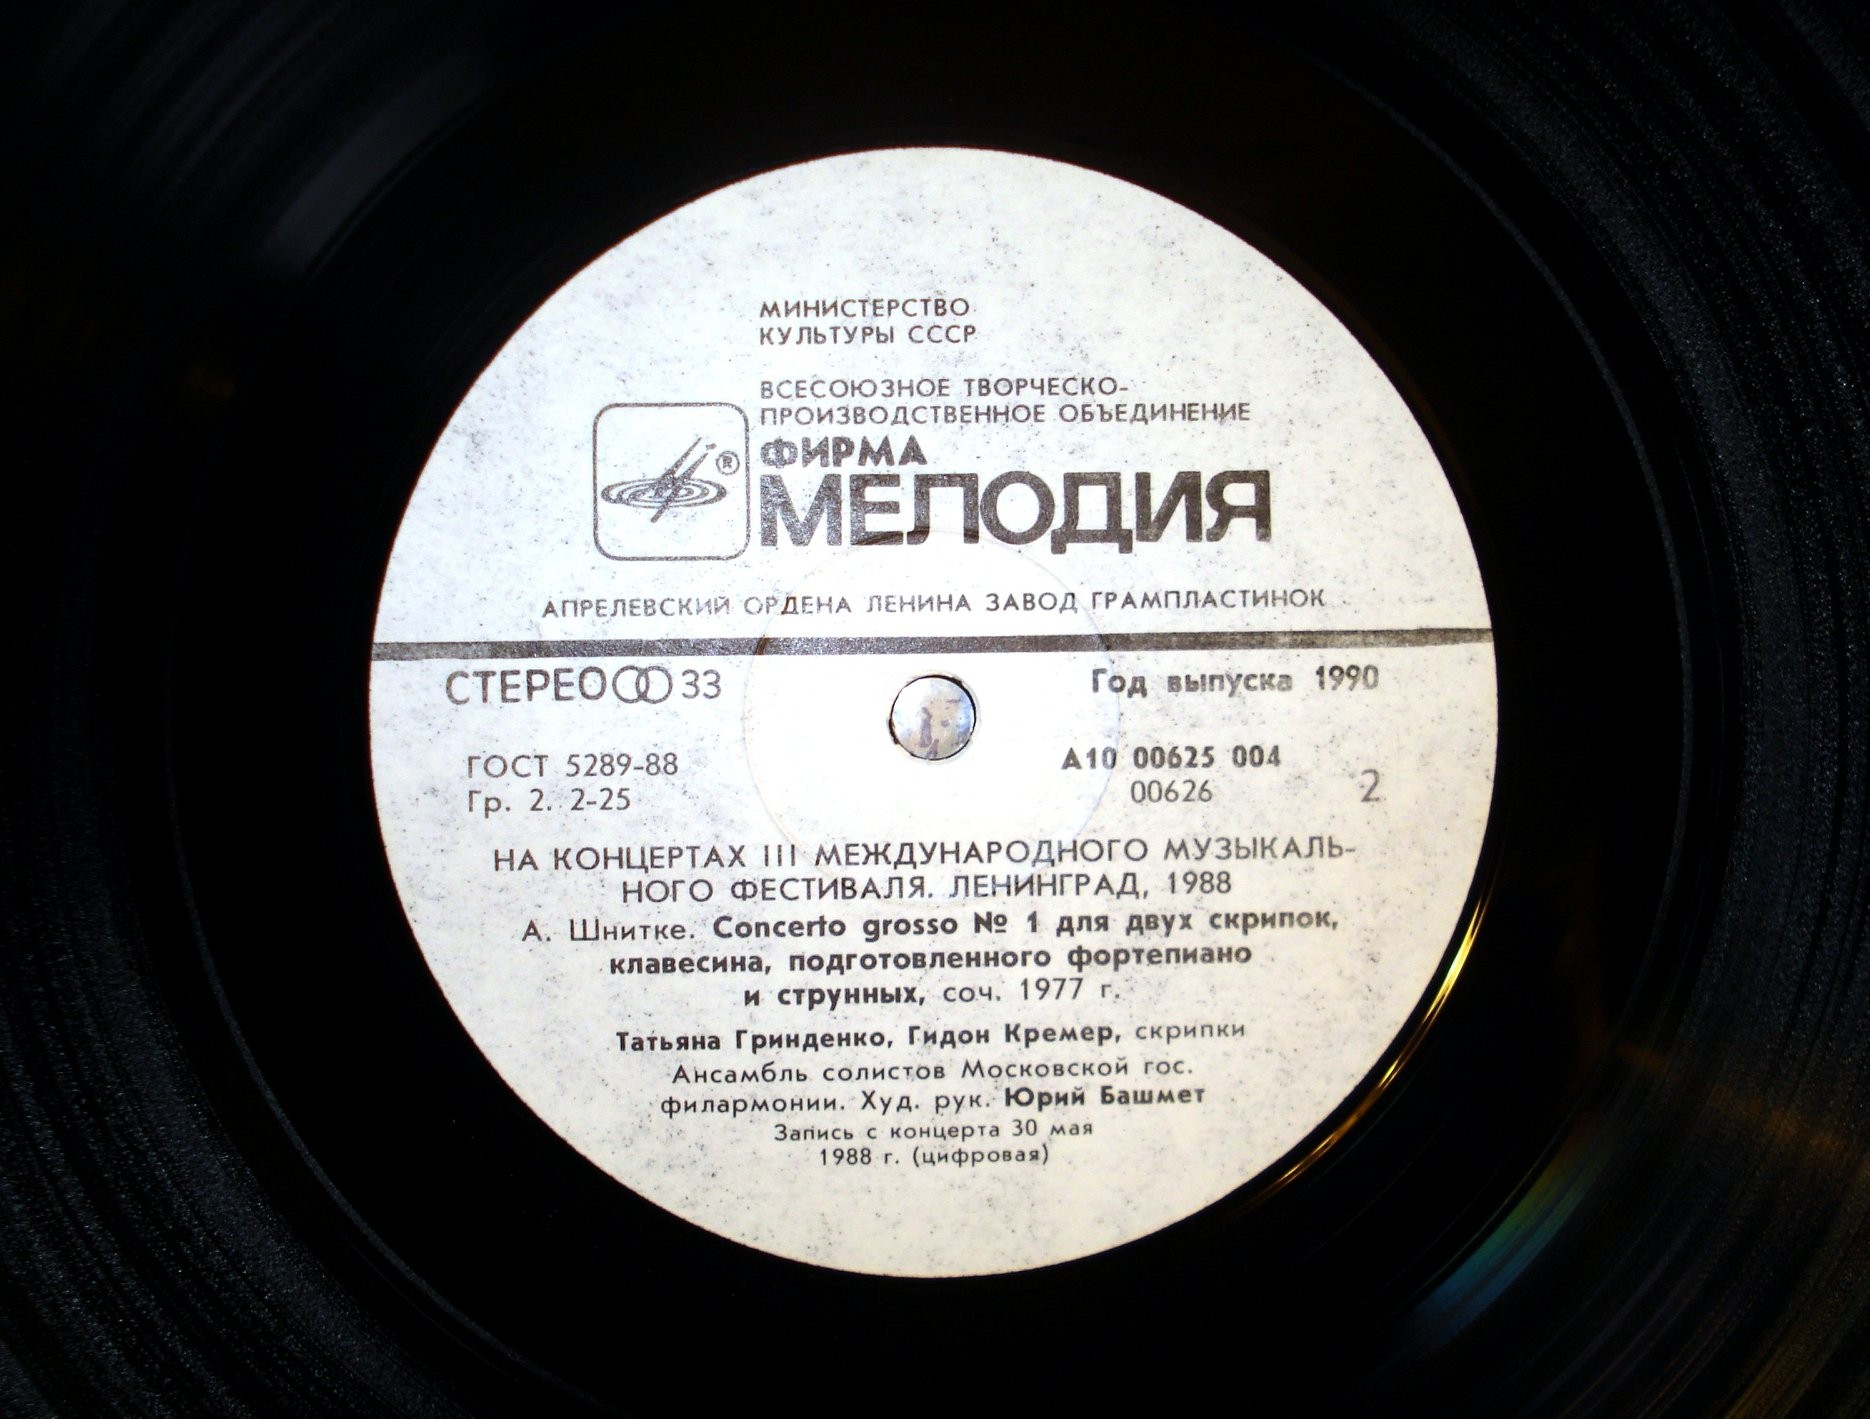 НА КОНЦЕРТАХ III МЕЖДУНАРОДНОГО МУЗЫКАЛЬНОГО ФЕСТИВАЛЯ (Ленинград, 1988)